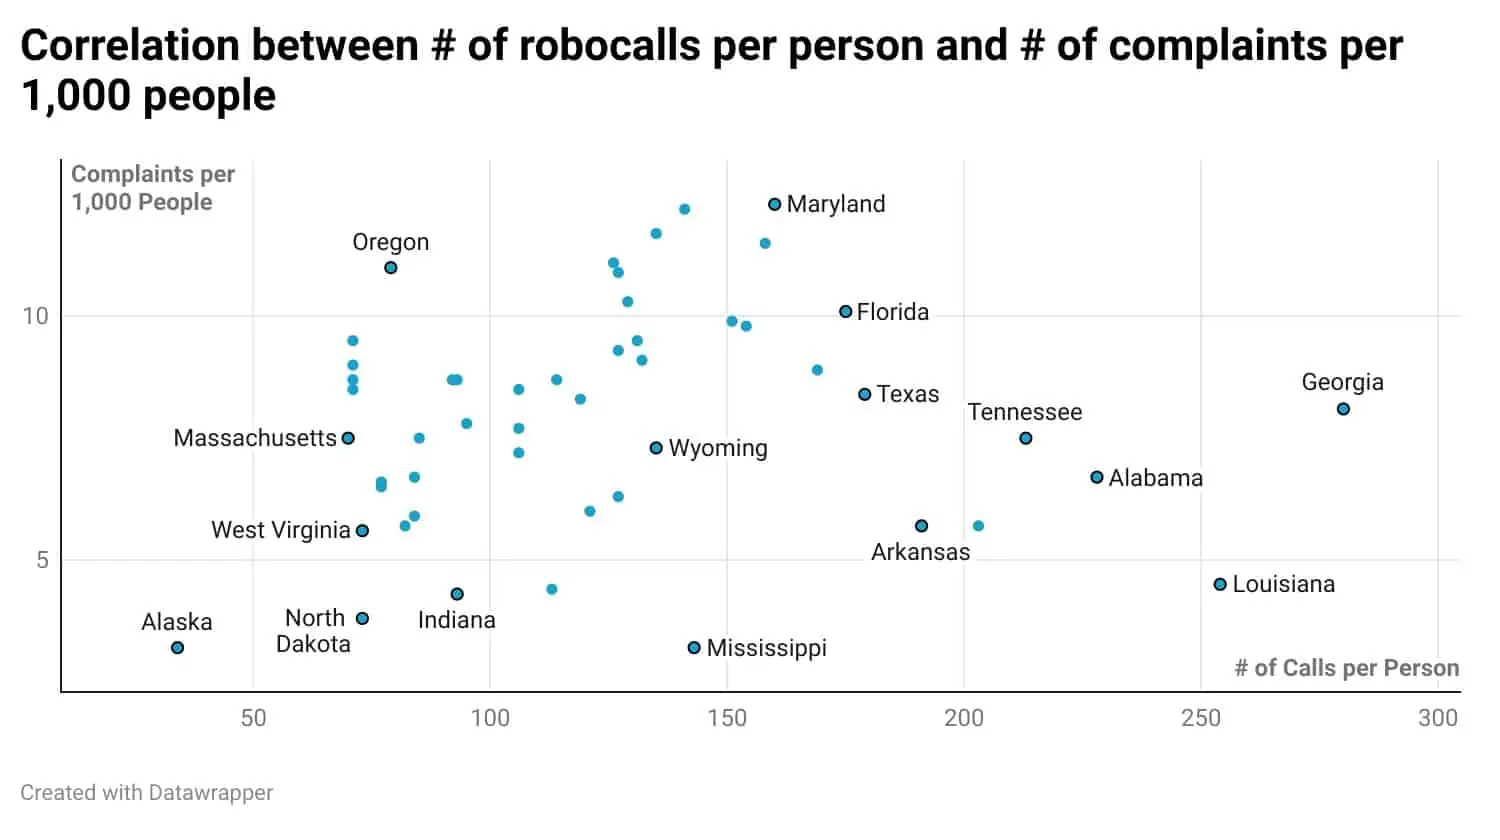 Correlation between robocalls per person and number of complaints